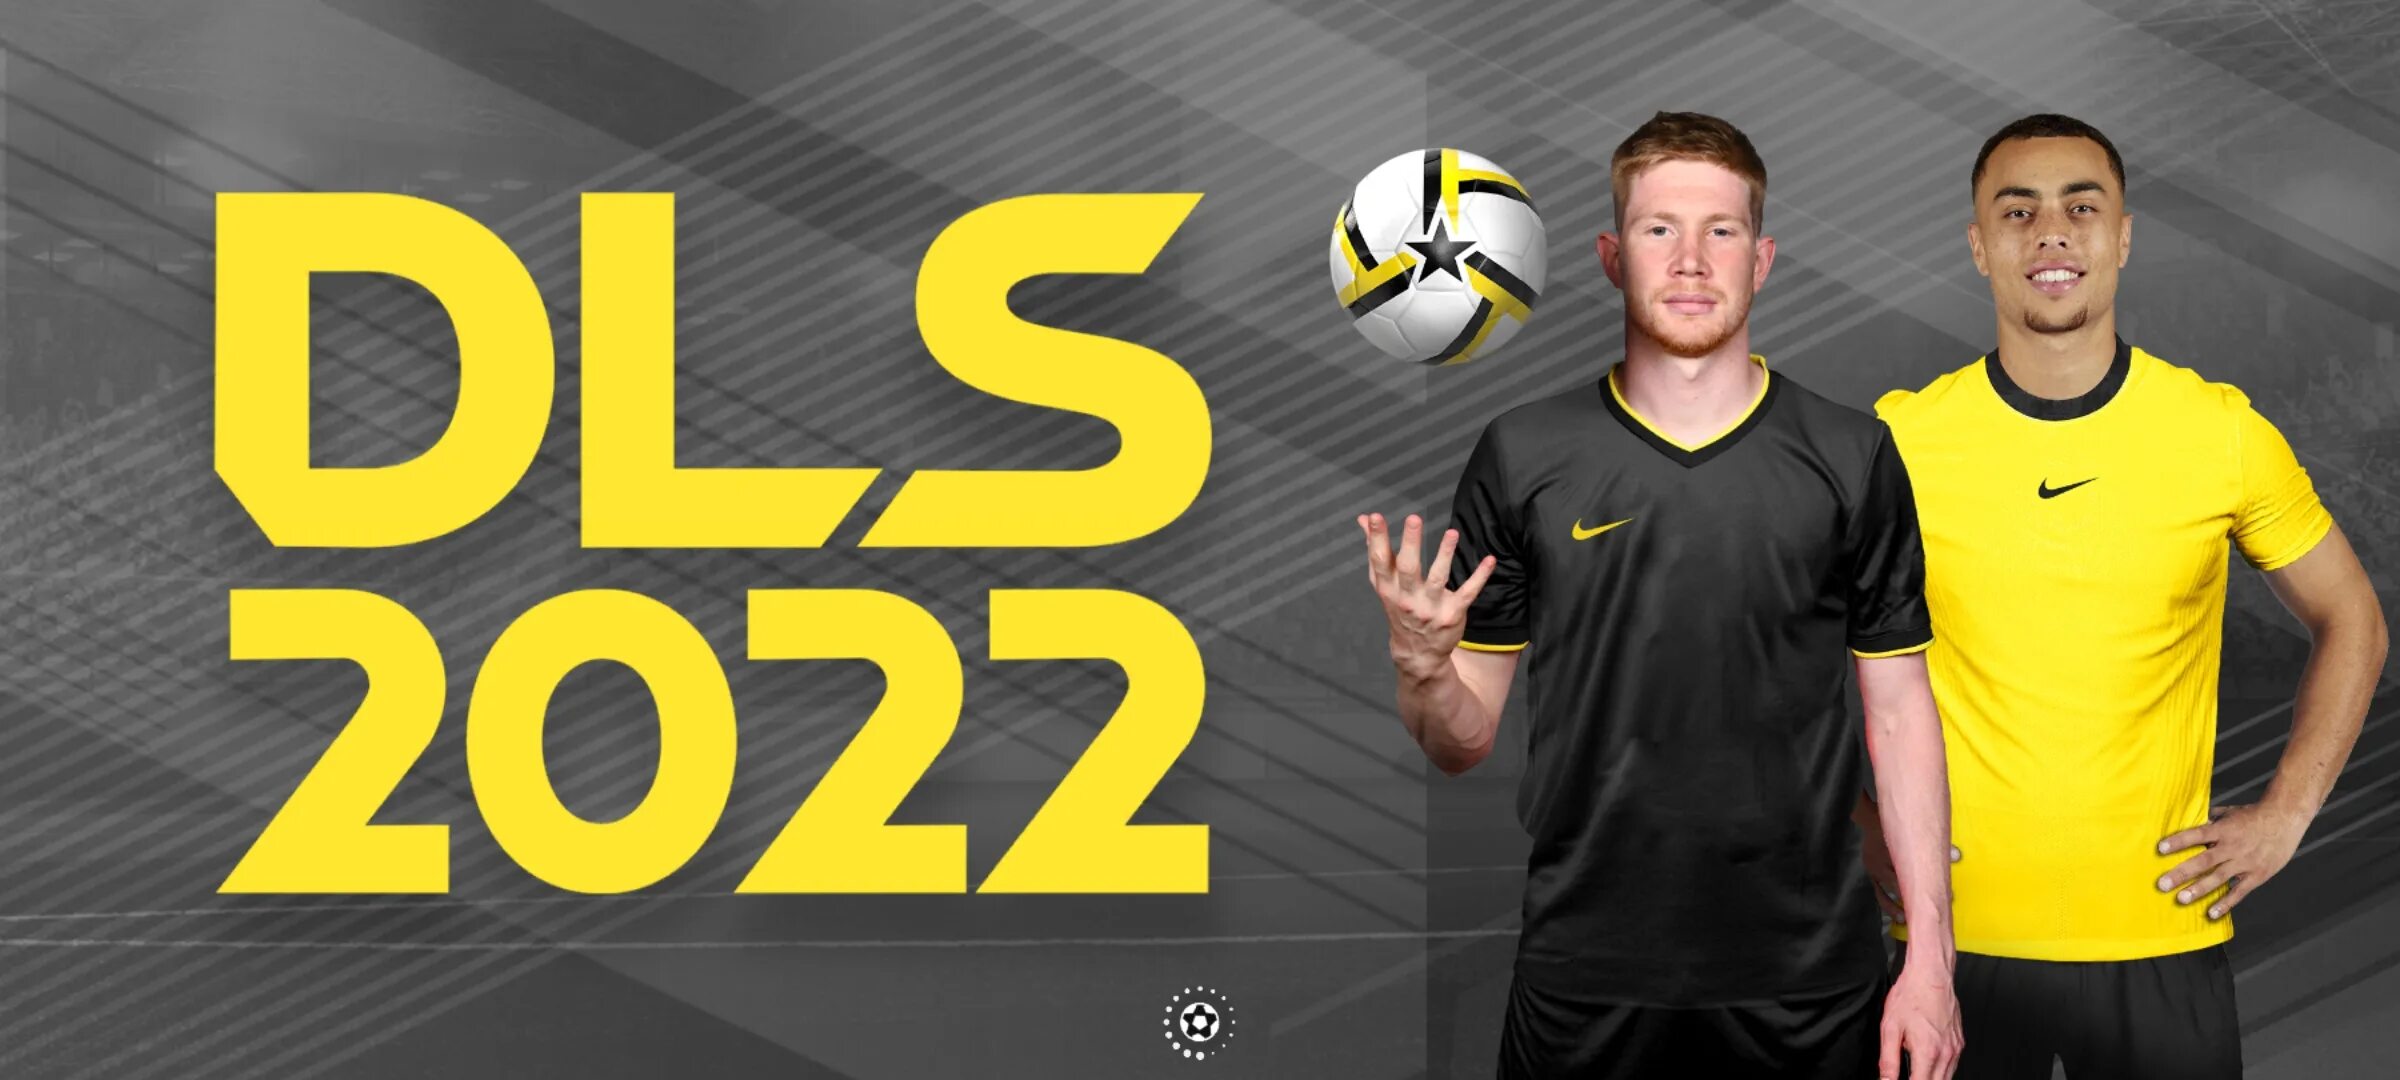 Длс 22. Dream Liga 2022. DLS 2022. Dls22 футбол.